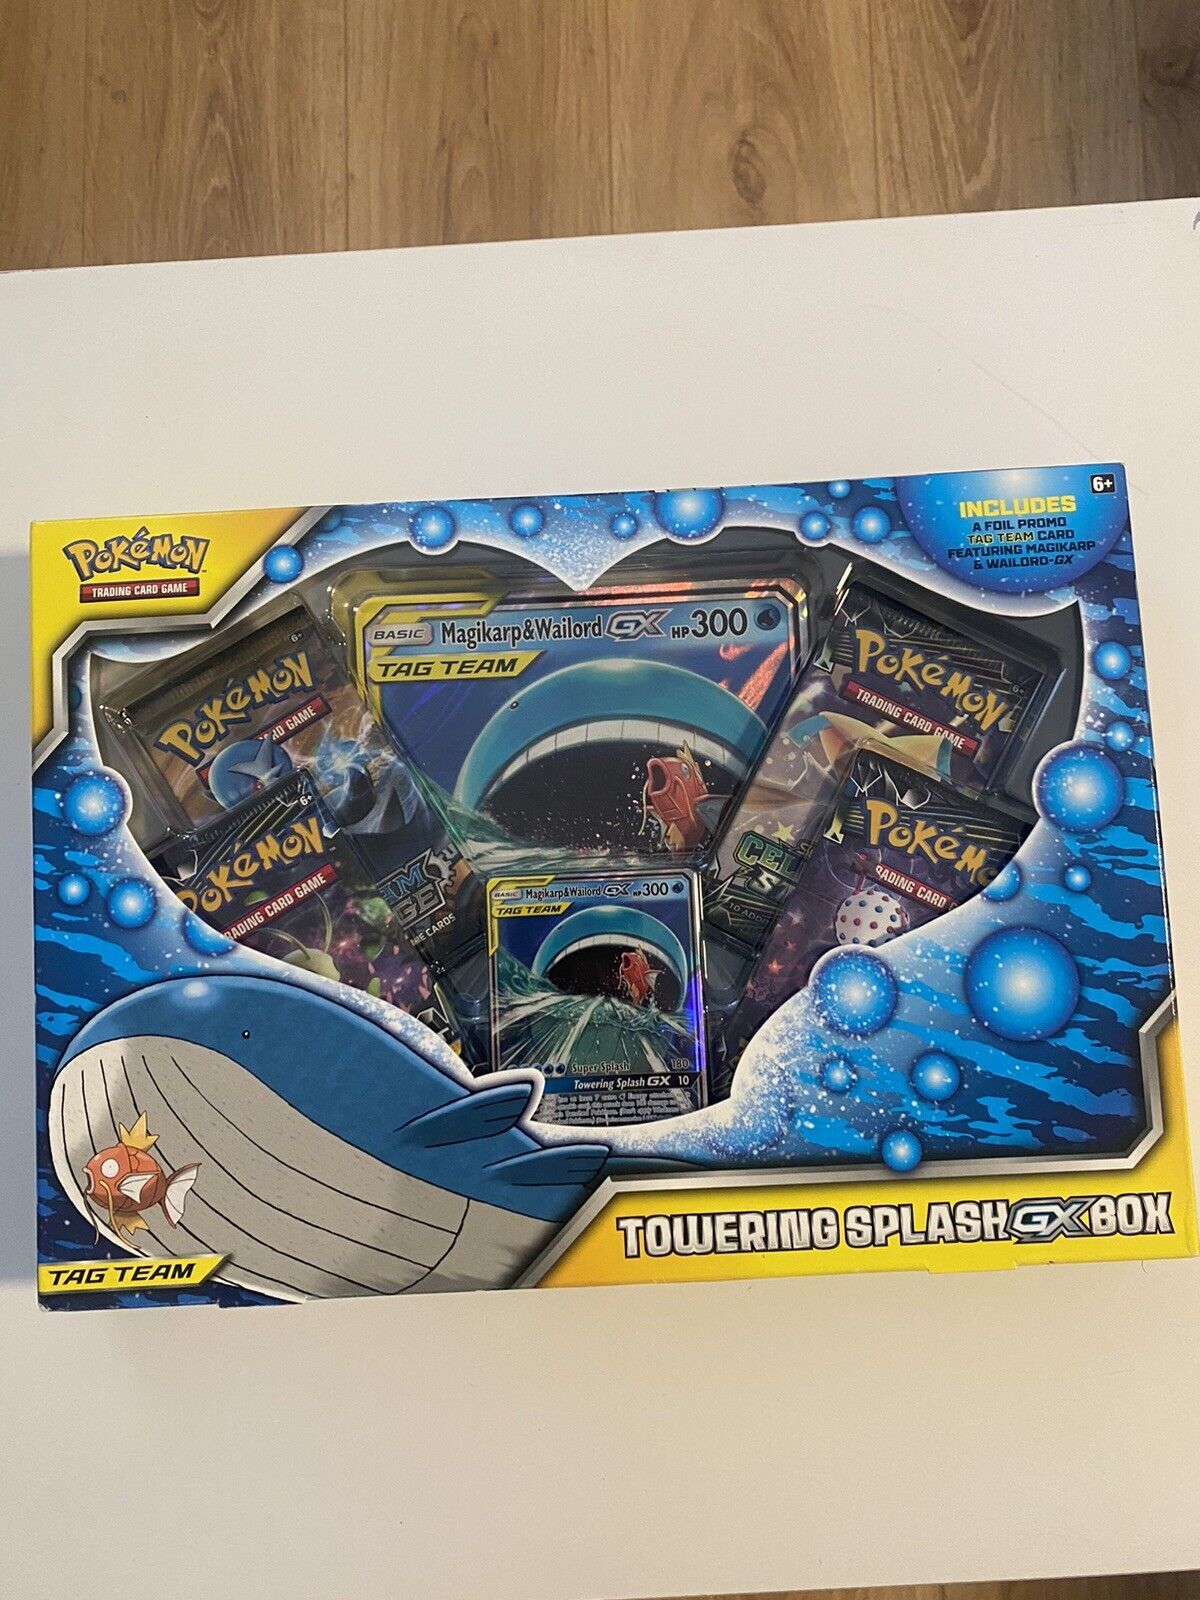 Pokemon TCG Towering Splash GX Box New Sealed